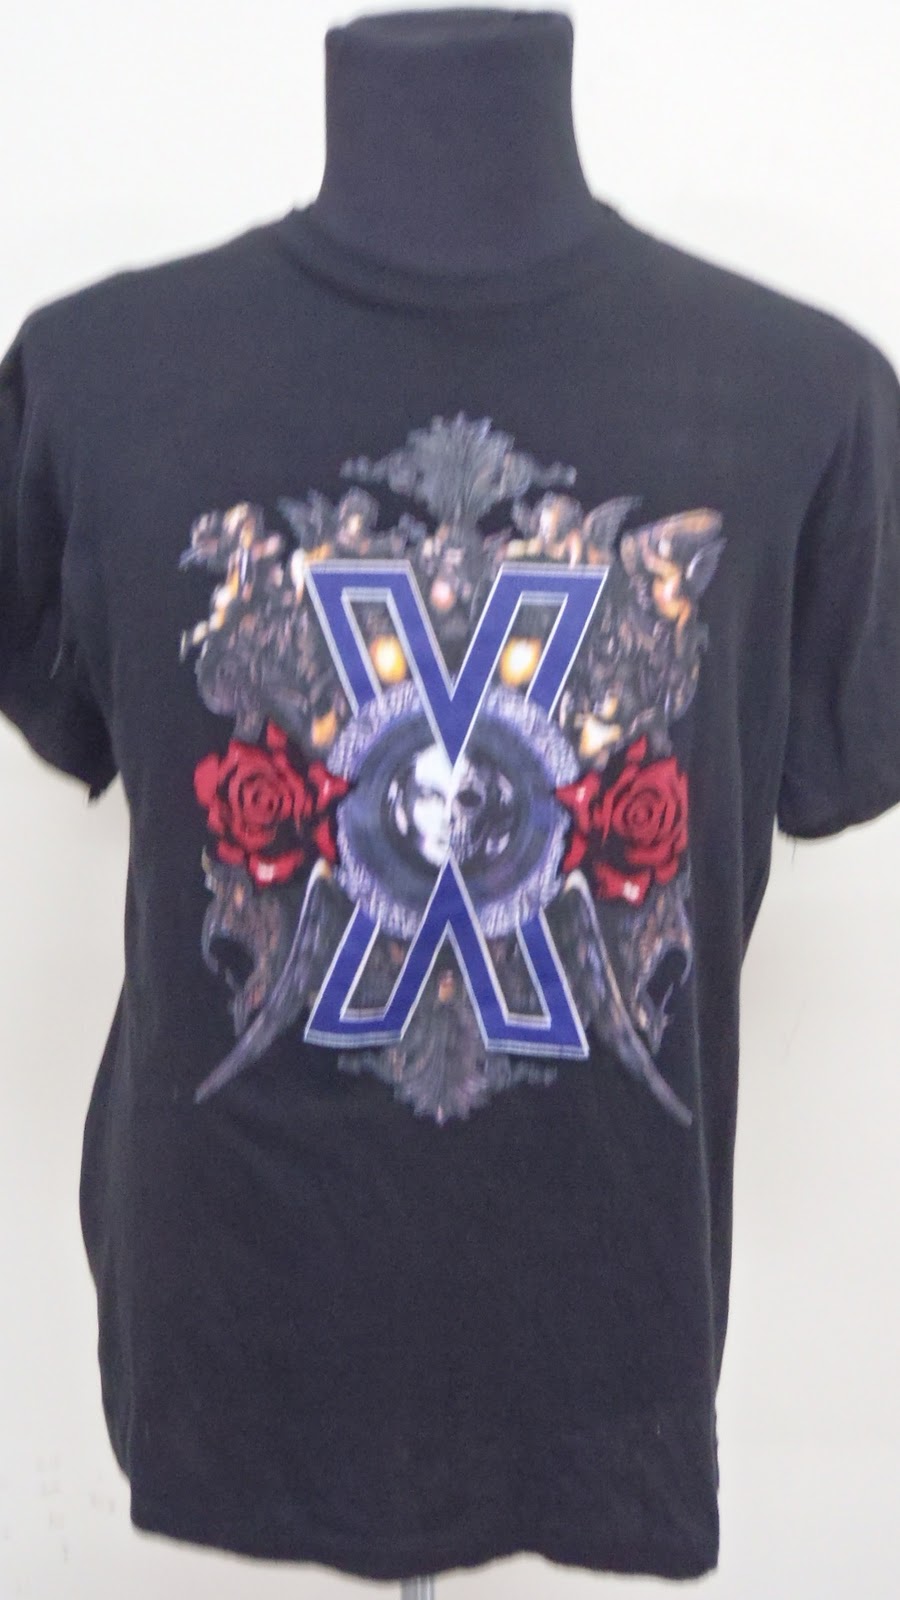 . x japan band tee shirt